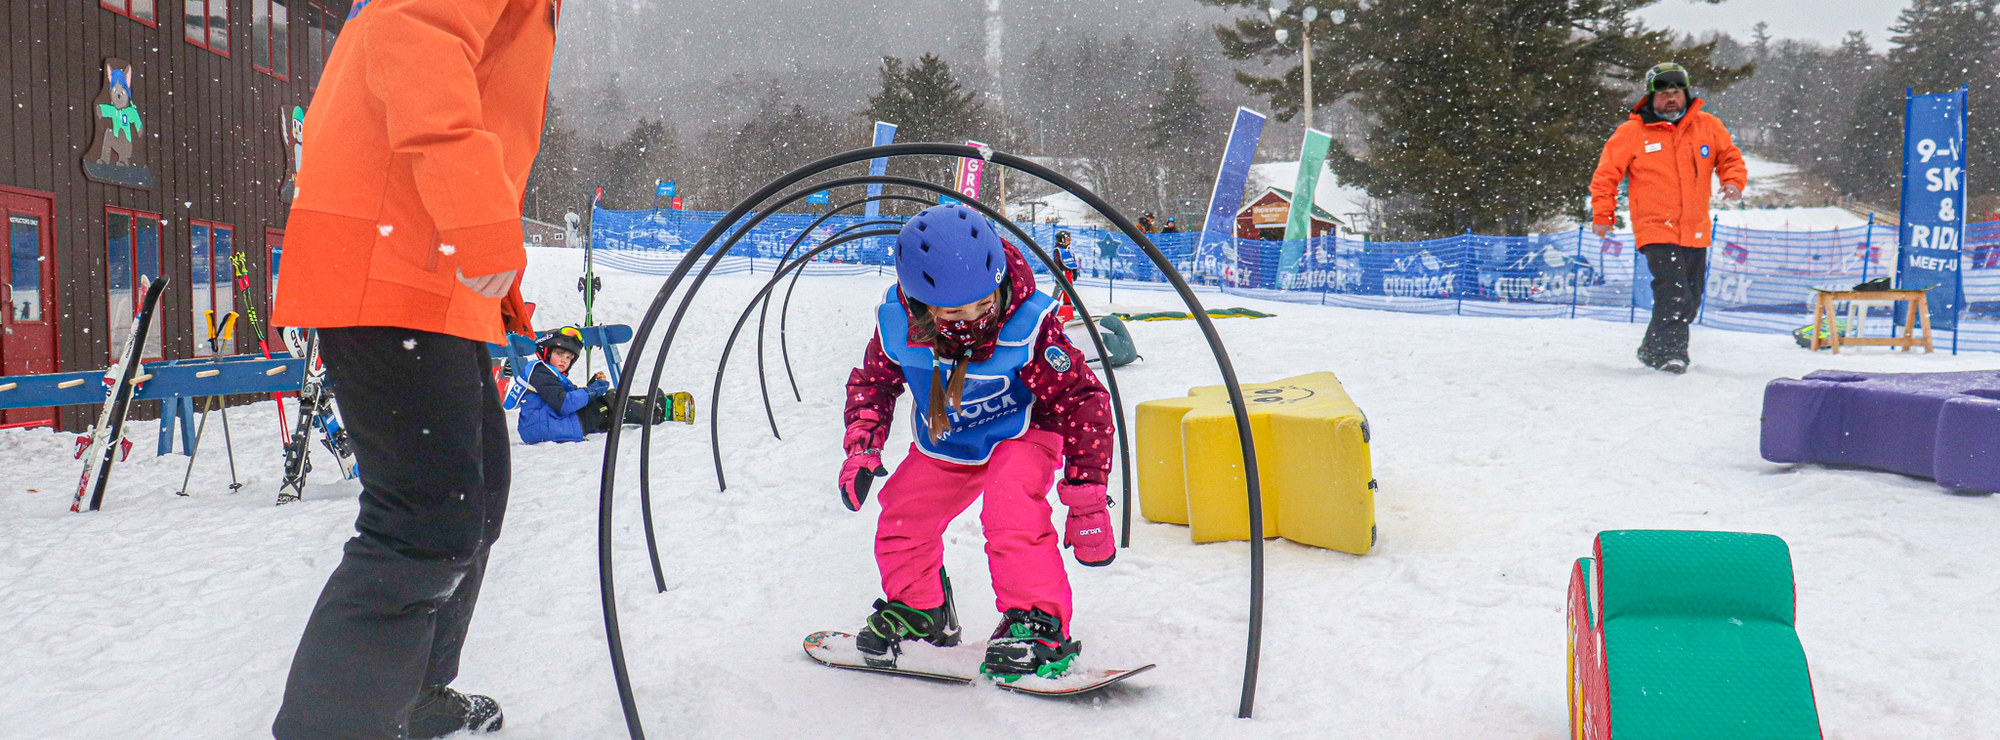 Instructor helps child snowboard under hoops.